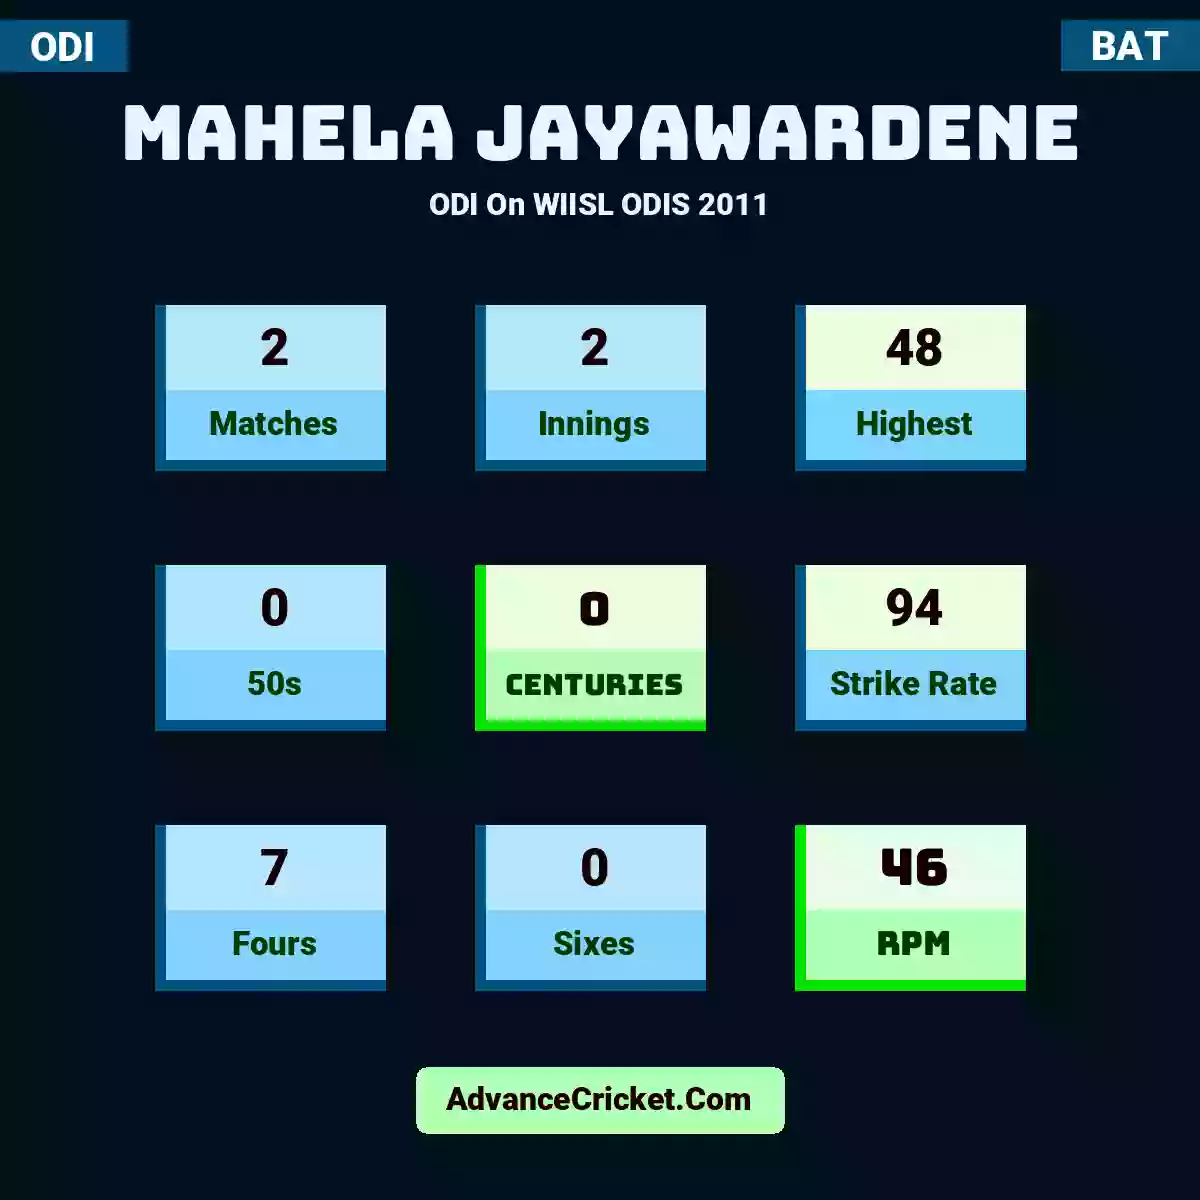 Mahela Jayawardene ODI  On WIISL ODIS 2011, Mahela Jayawardene played 2 matches, scored 48 runs as highest, 0 half-centuries, and 0 centuries, with a strike rate of 94. M.Jayawardene hit 7 fours and 0 sixes, with an RPM of 46.